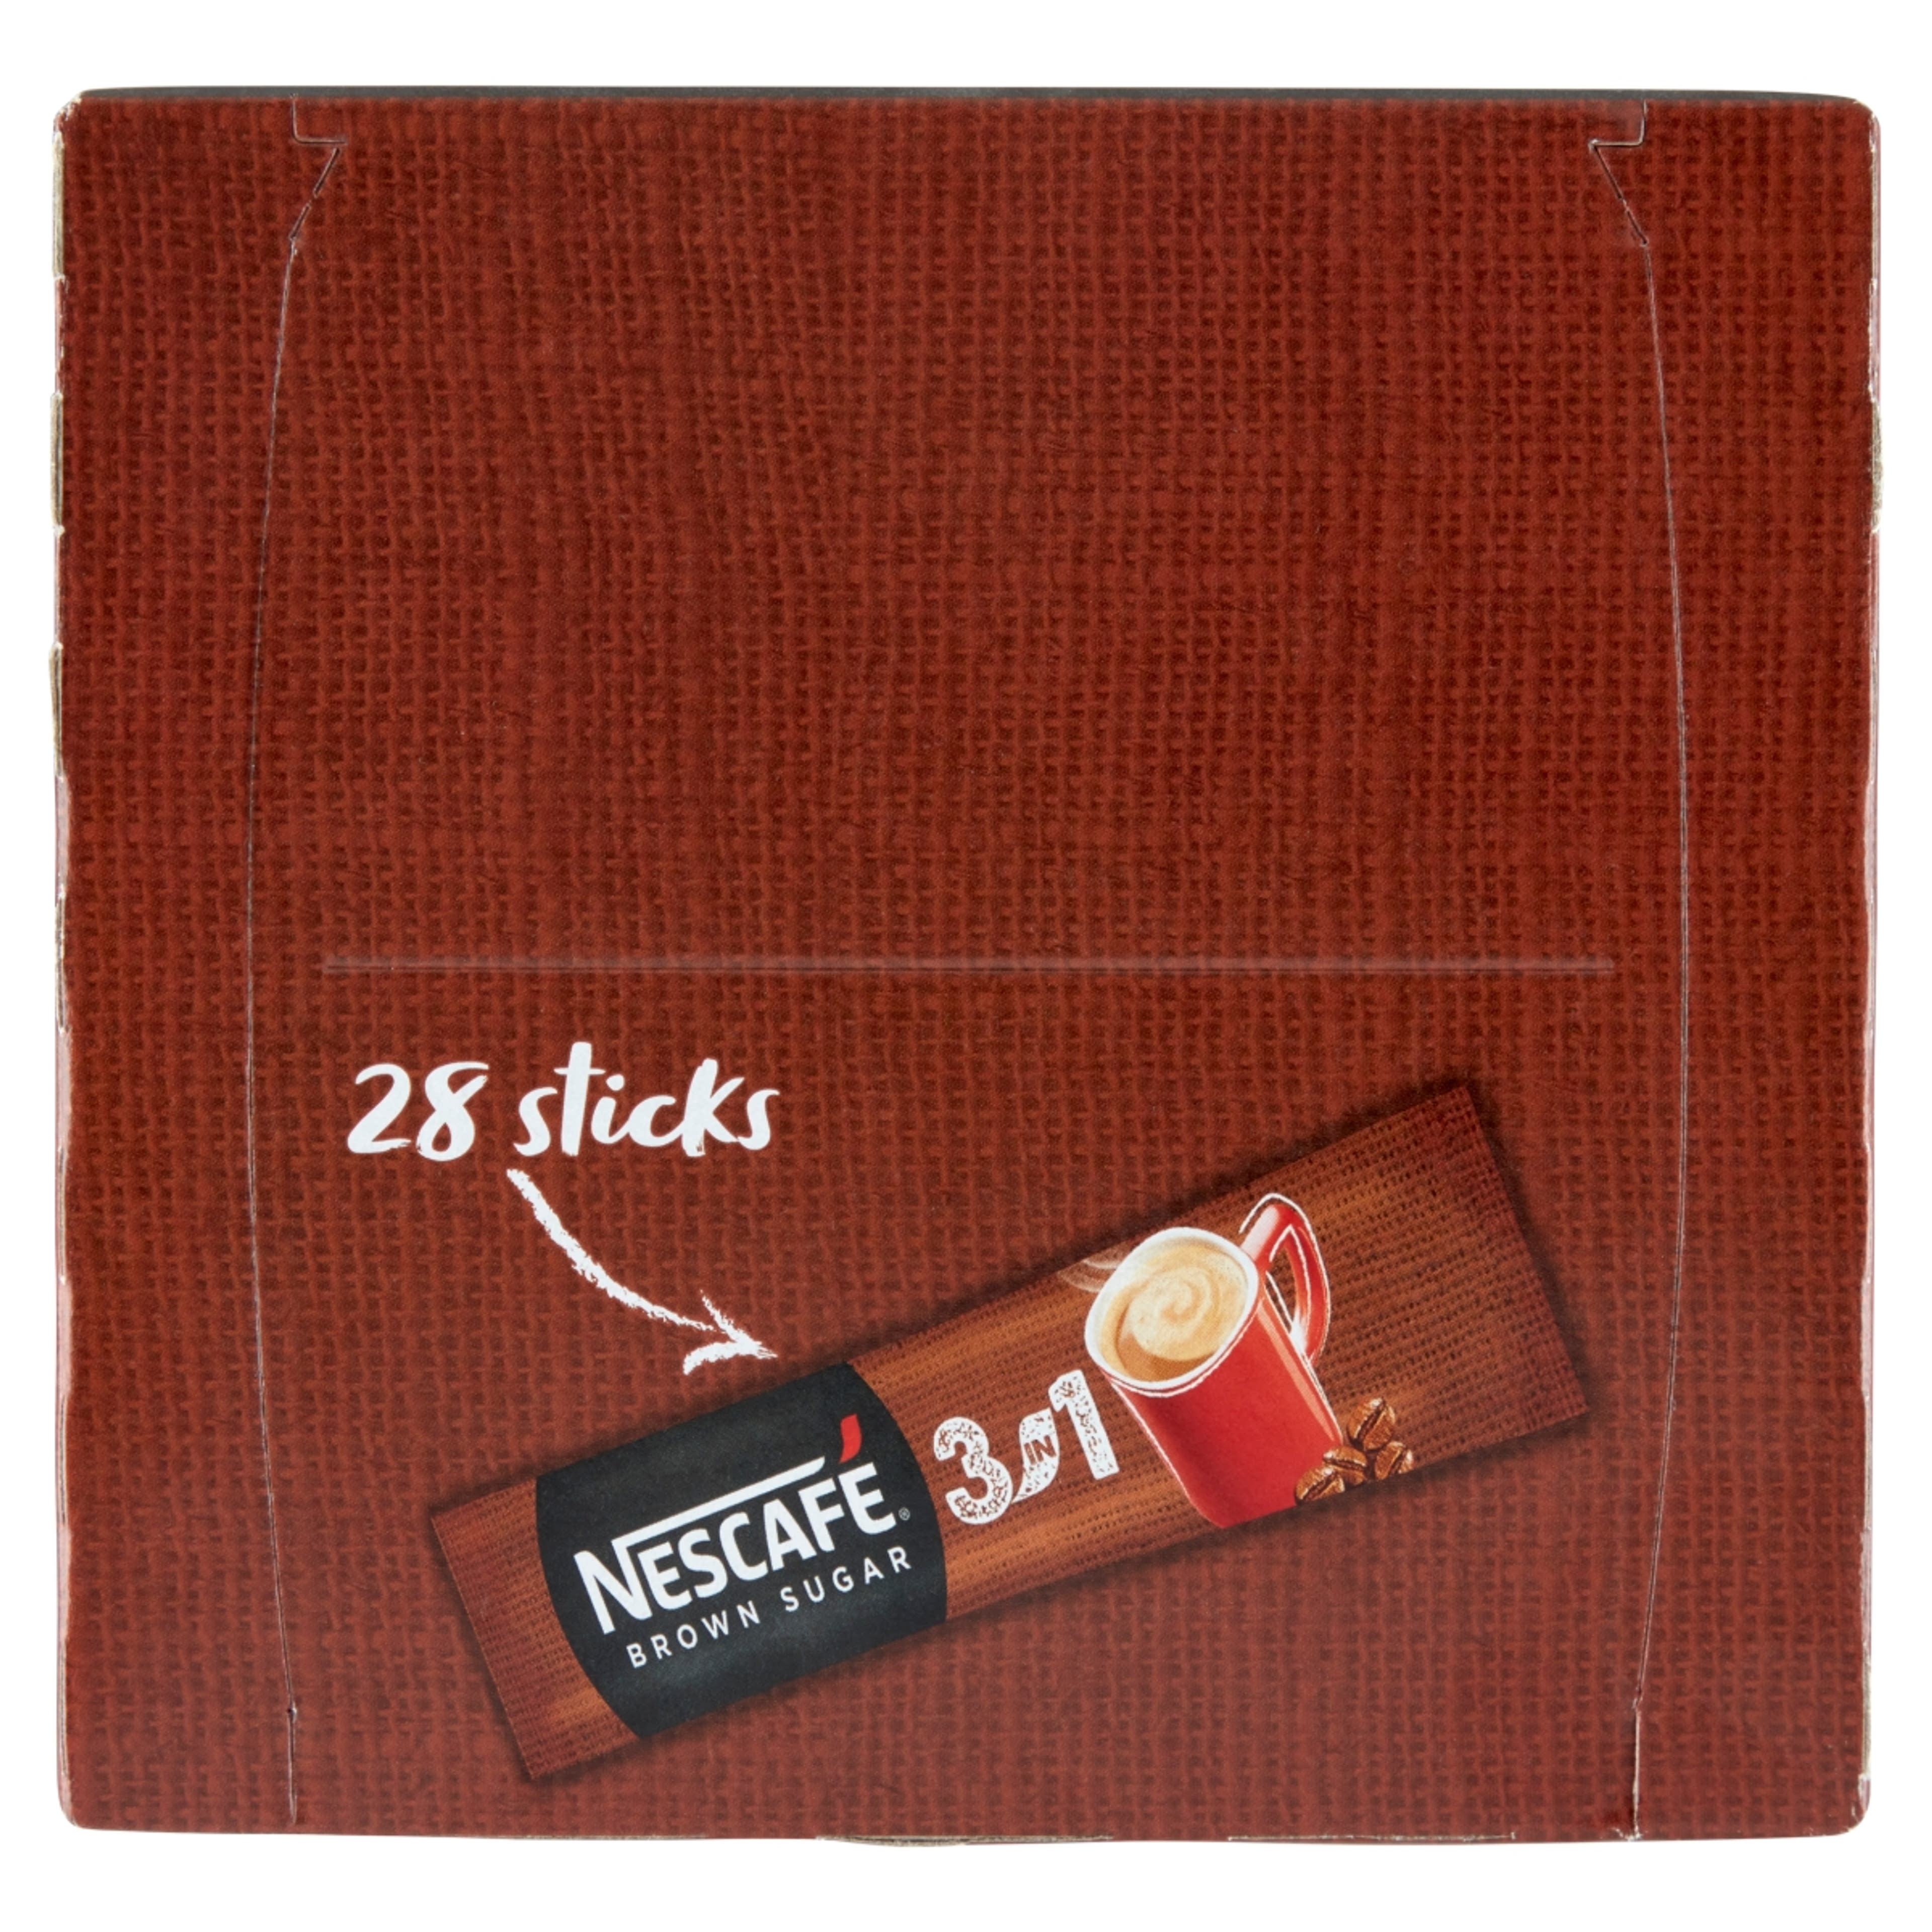 Nescafé 3in1 instant kávé barna cukorral - 28 db